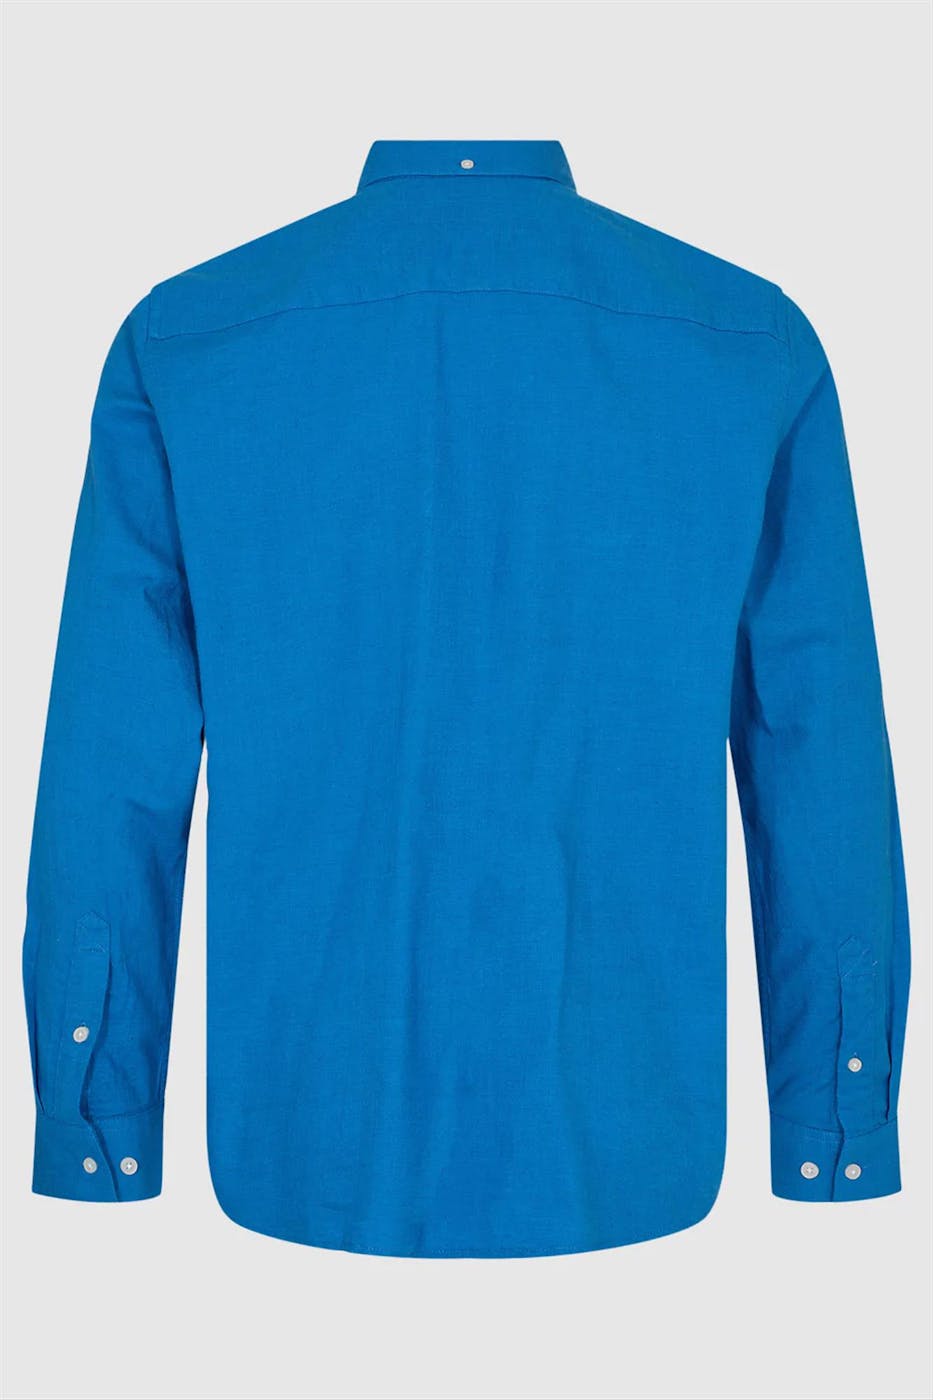 Minimum - Hemelsblauw Jay 3.0 hemd